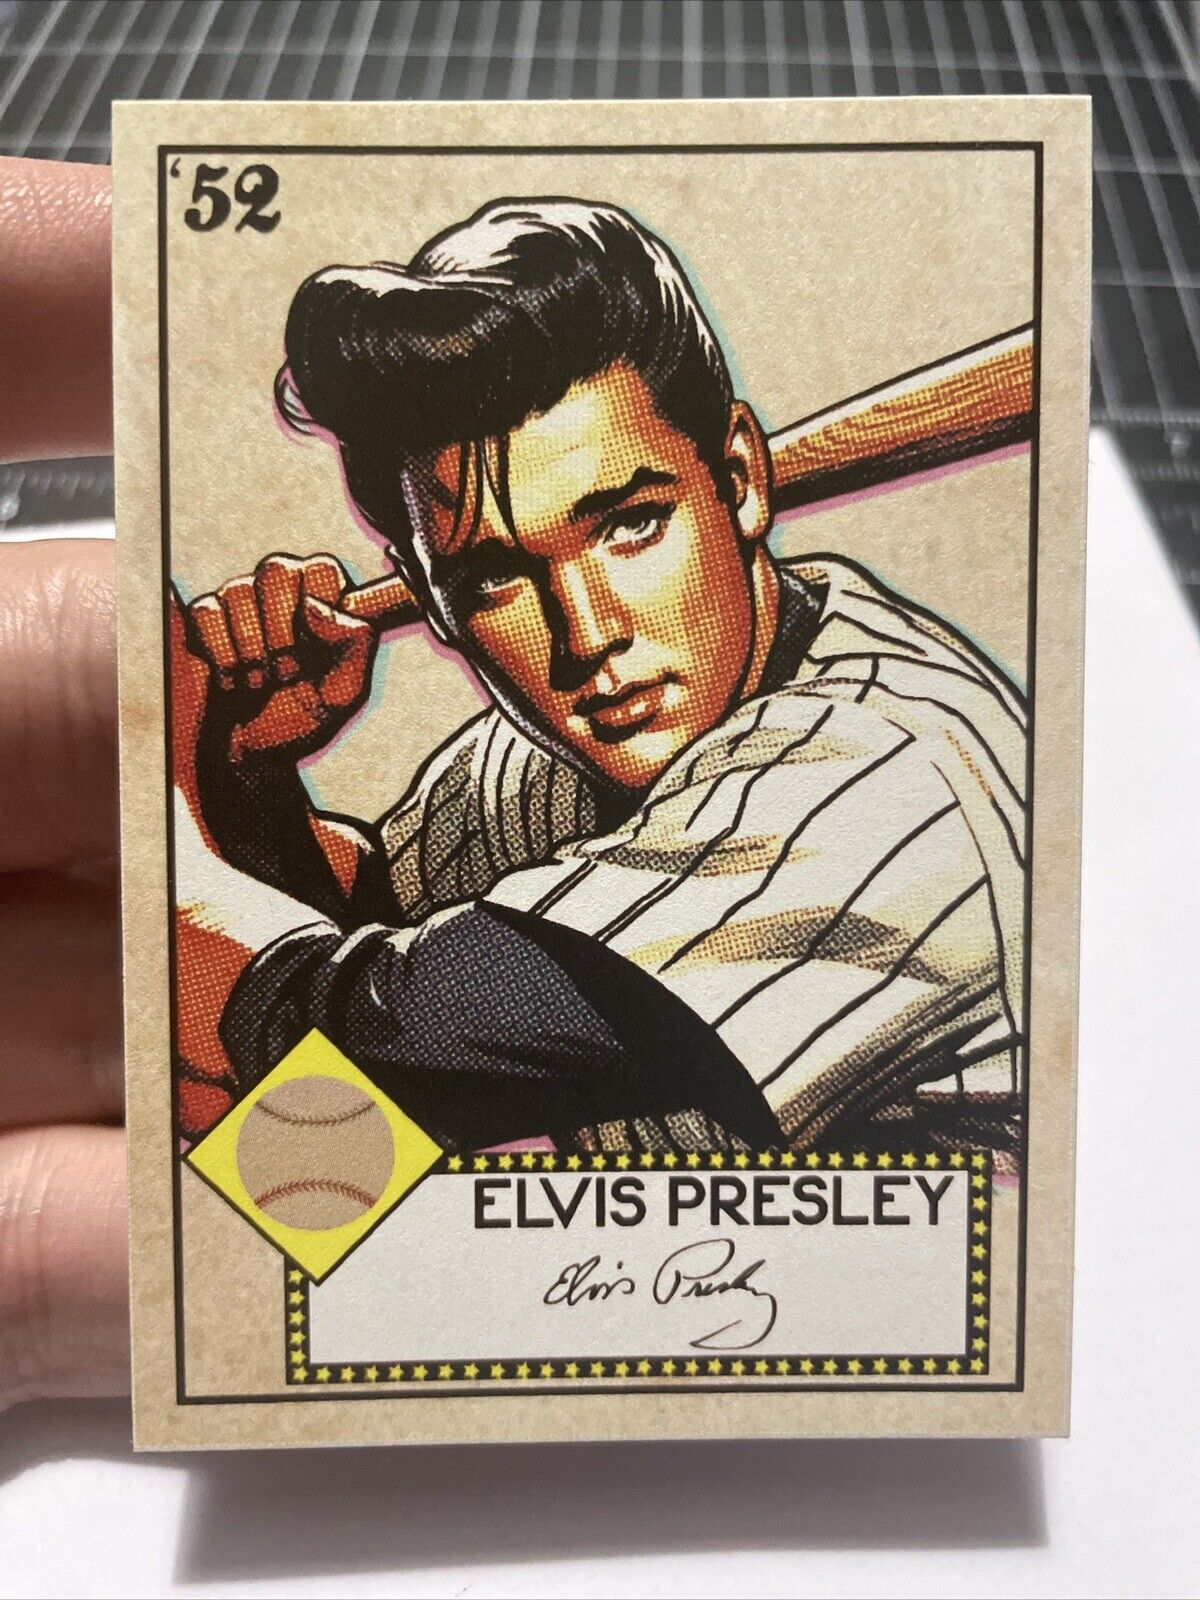 ‘52 Design Elvis Presley Baseball Card Art Print Trading Card  - by MPRINTS